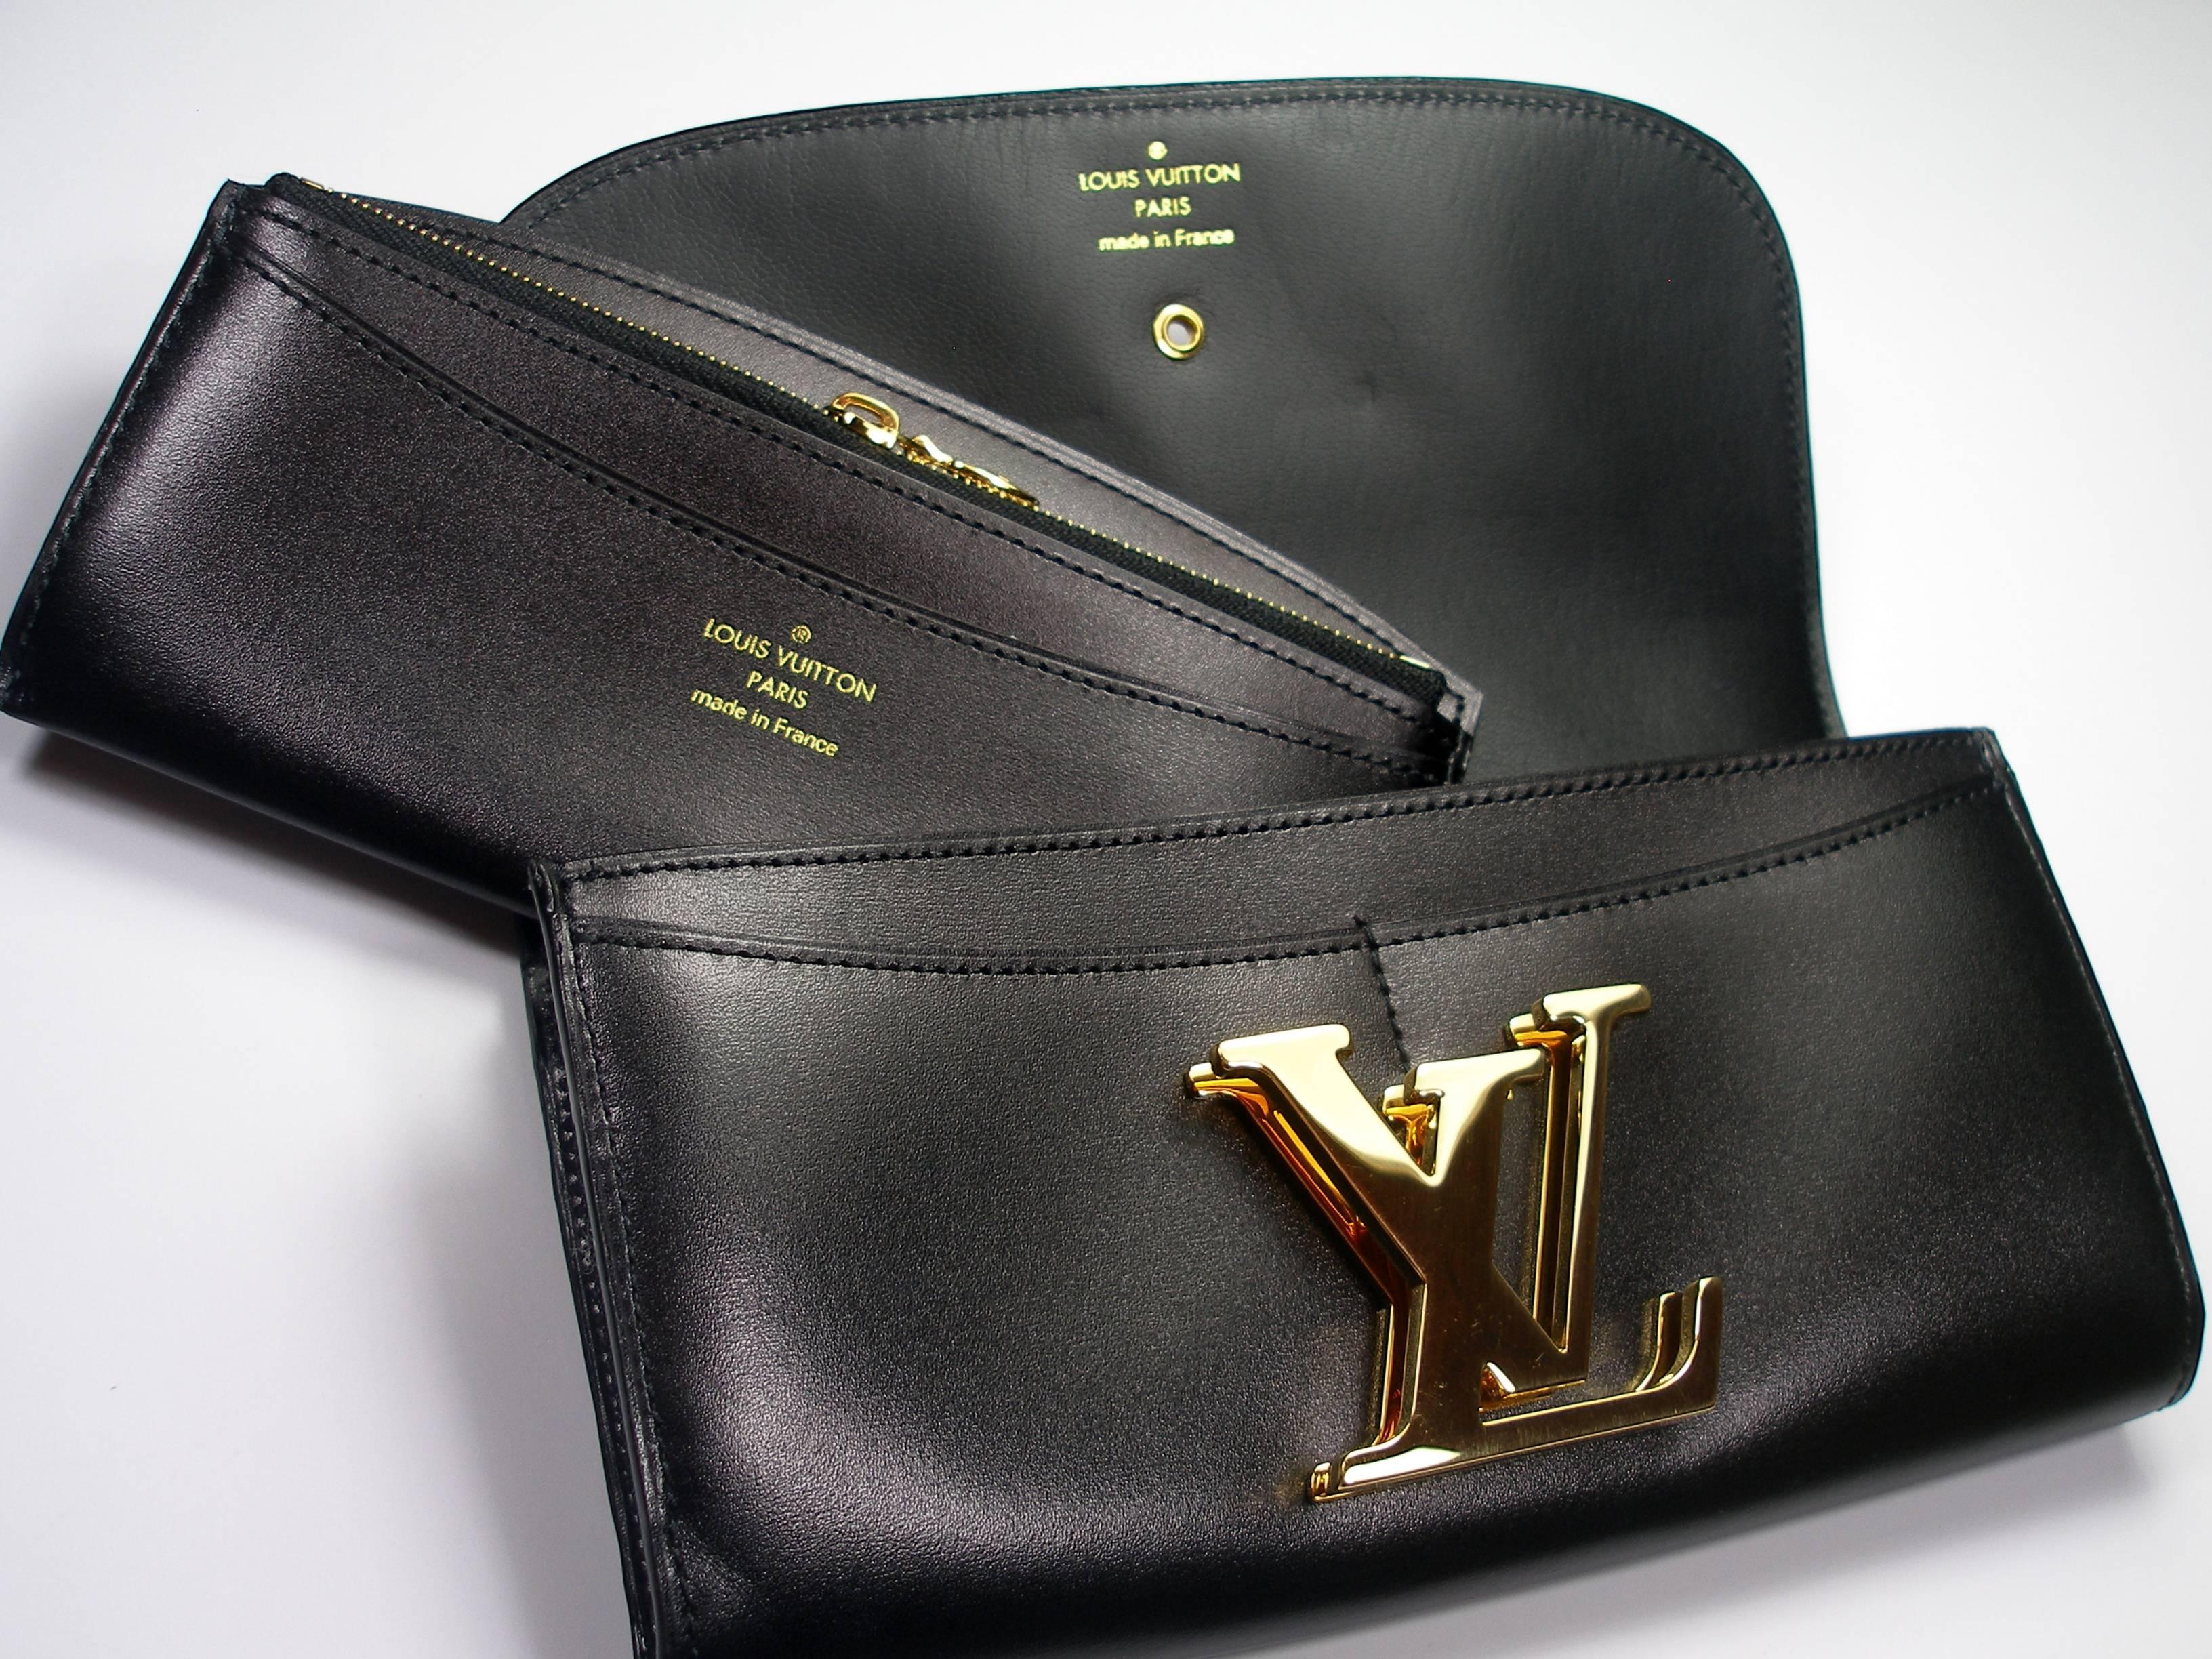  LOUIS VUITTON Box Calfskin Vivienne Duo LV Long Wallet Noir Black / BRAND NEW  In Excellent Condition In VERGT, FR